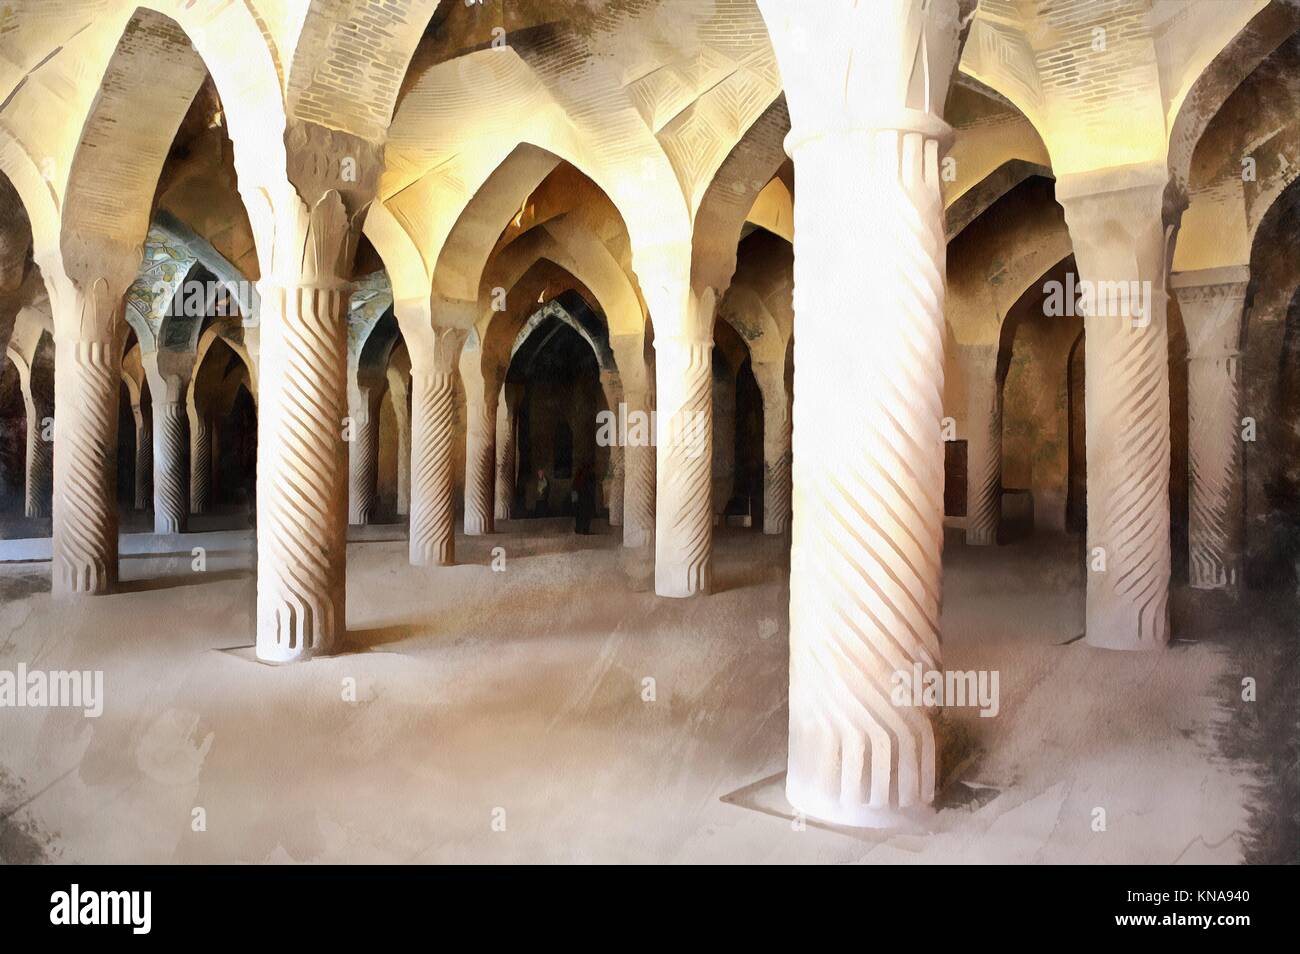 Colorful painting of Vaqil mosue interior with columns, Shiraz, Iran. Stock Photo